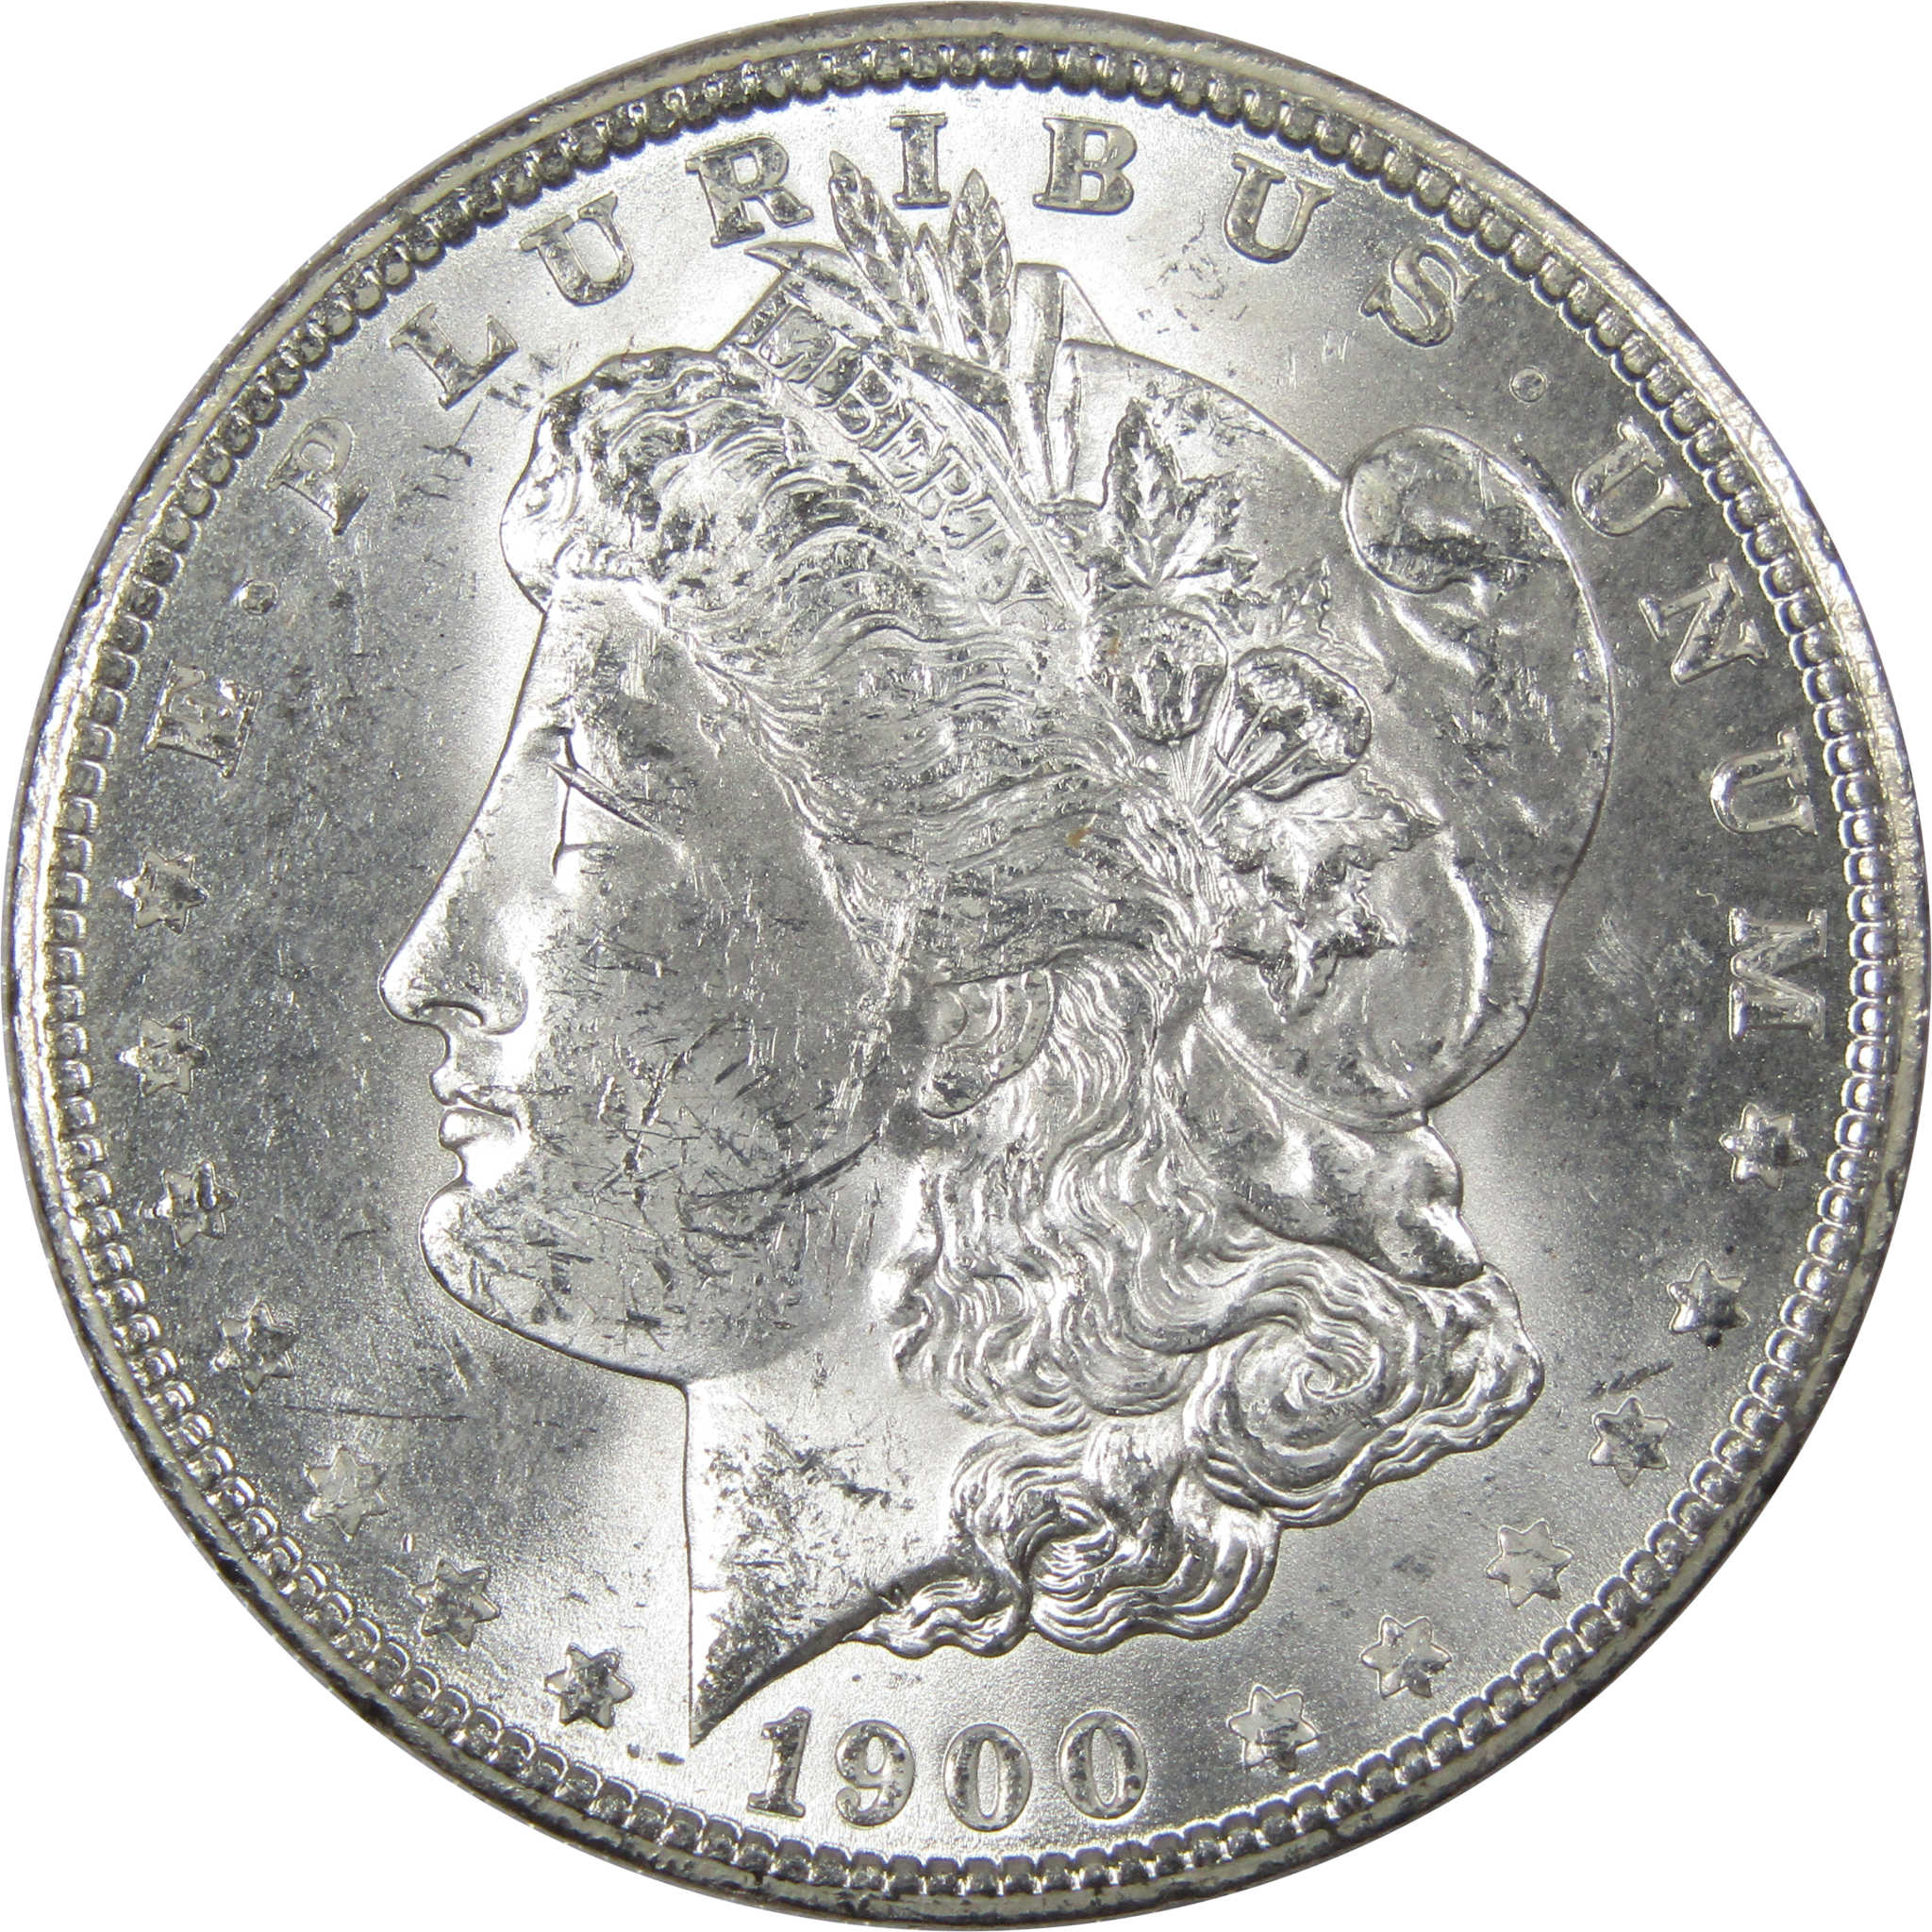 1900 O Morgan Dollar BU Uncirculated Mint State 90% Silver SKU:IPC9758 - Morgan coin - Morgan silver dollar - Morgan silver dollar for sale - Profile Coins &amp; Collectibles